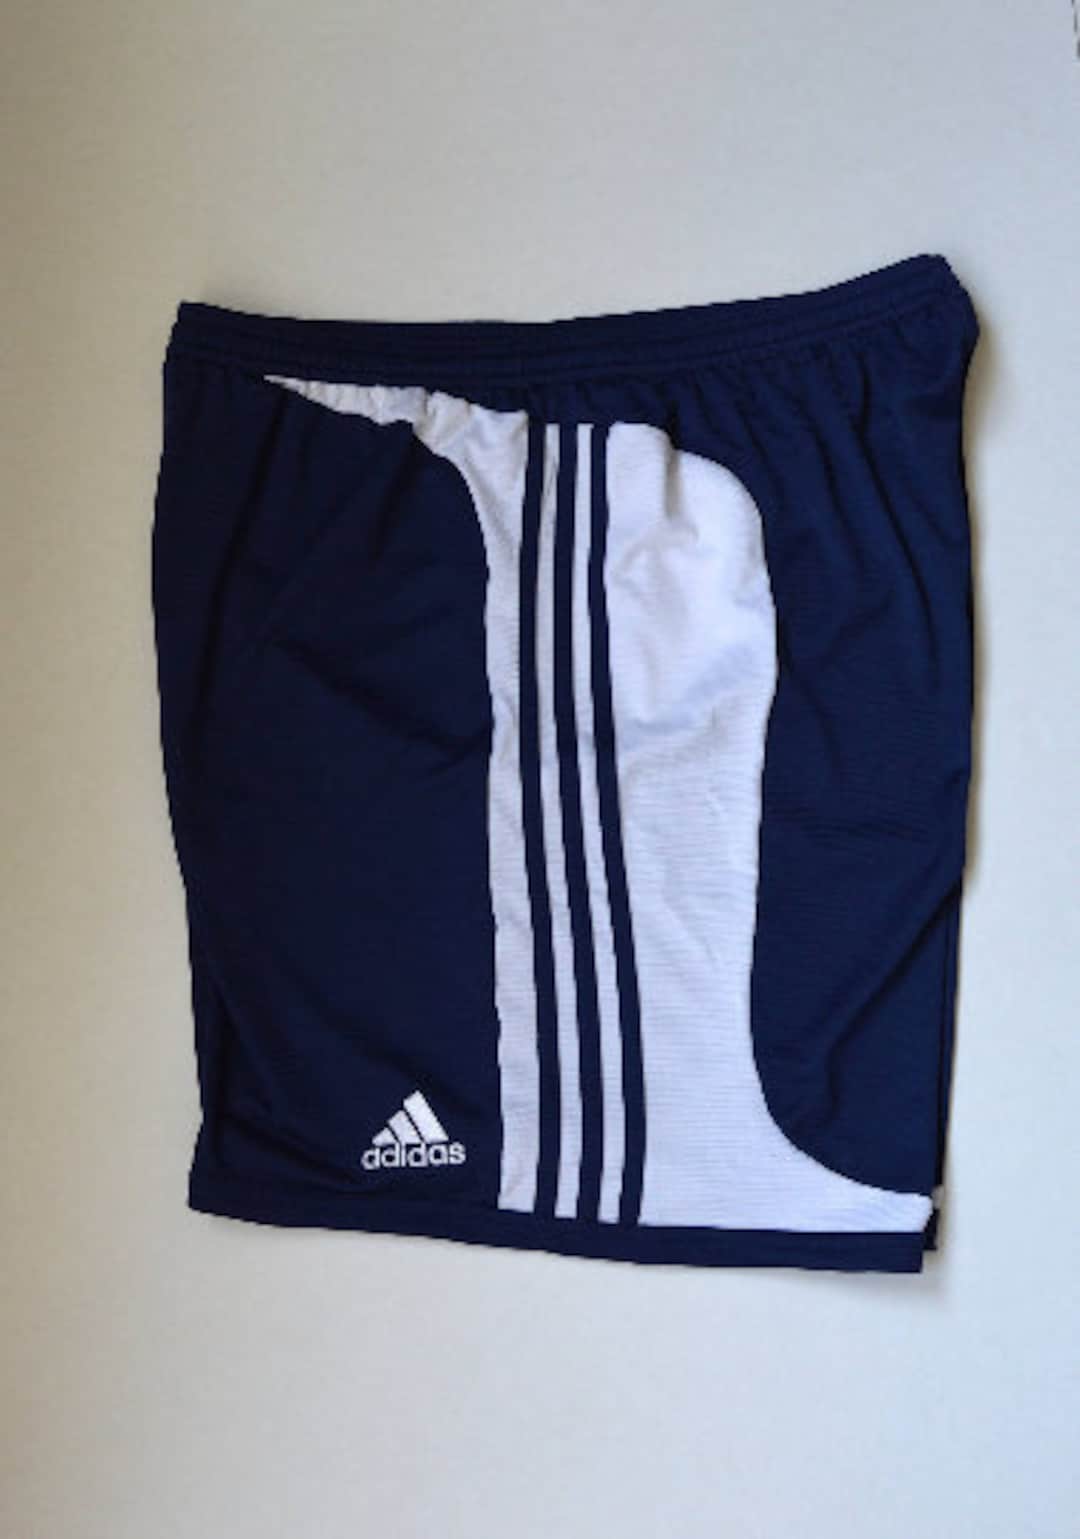 Adidas 3 Stripe Soccer Shorts Adidas 90s Navy - Etsy